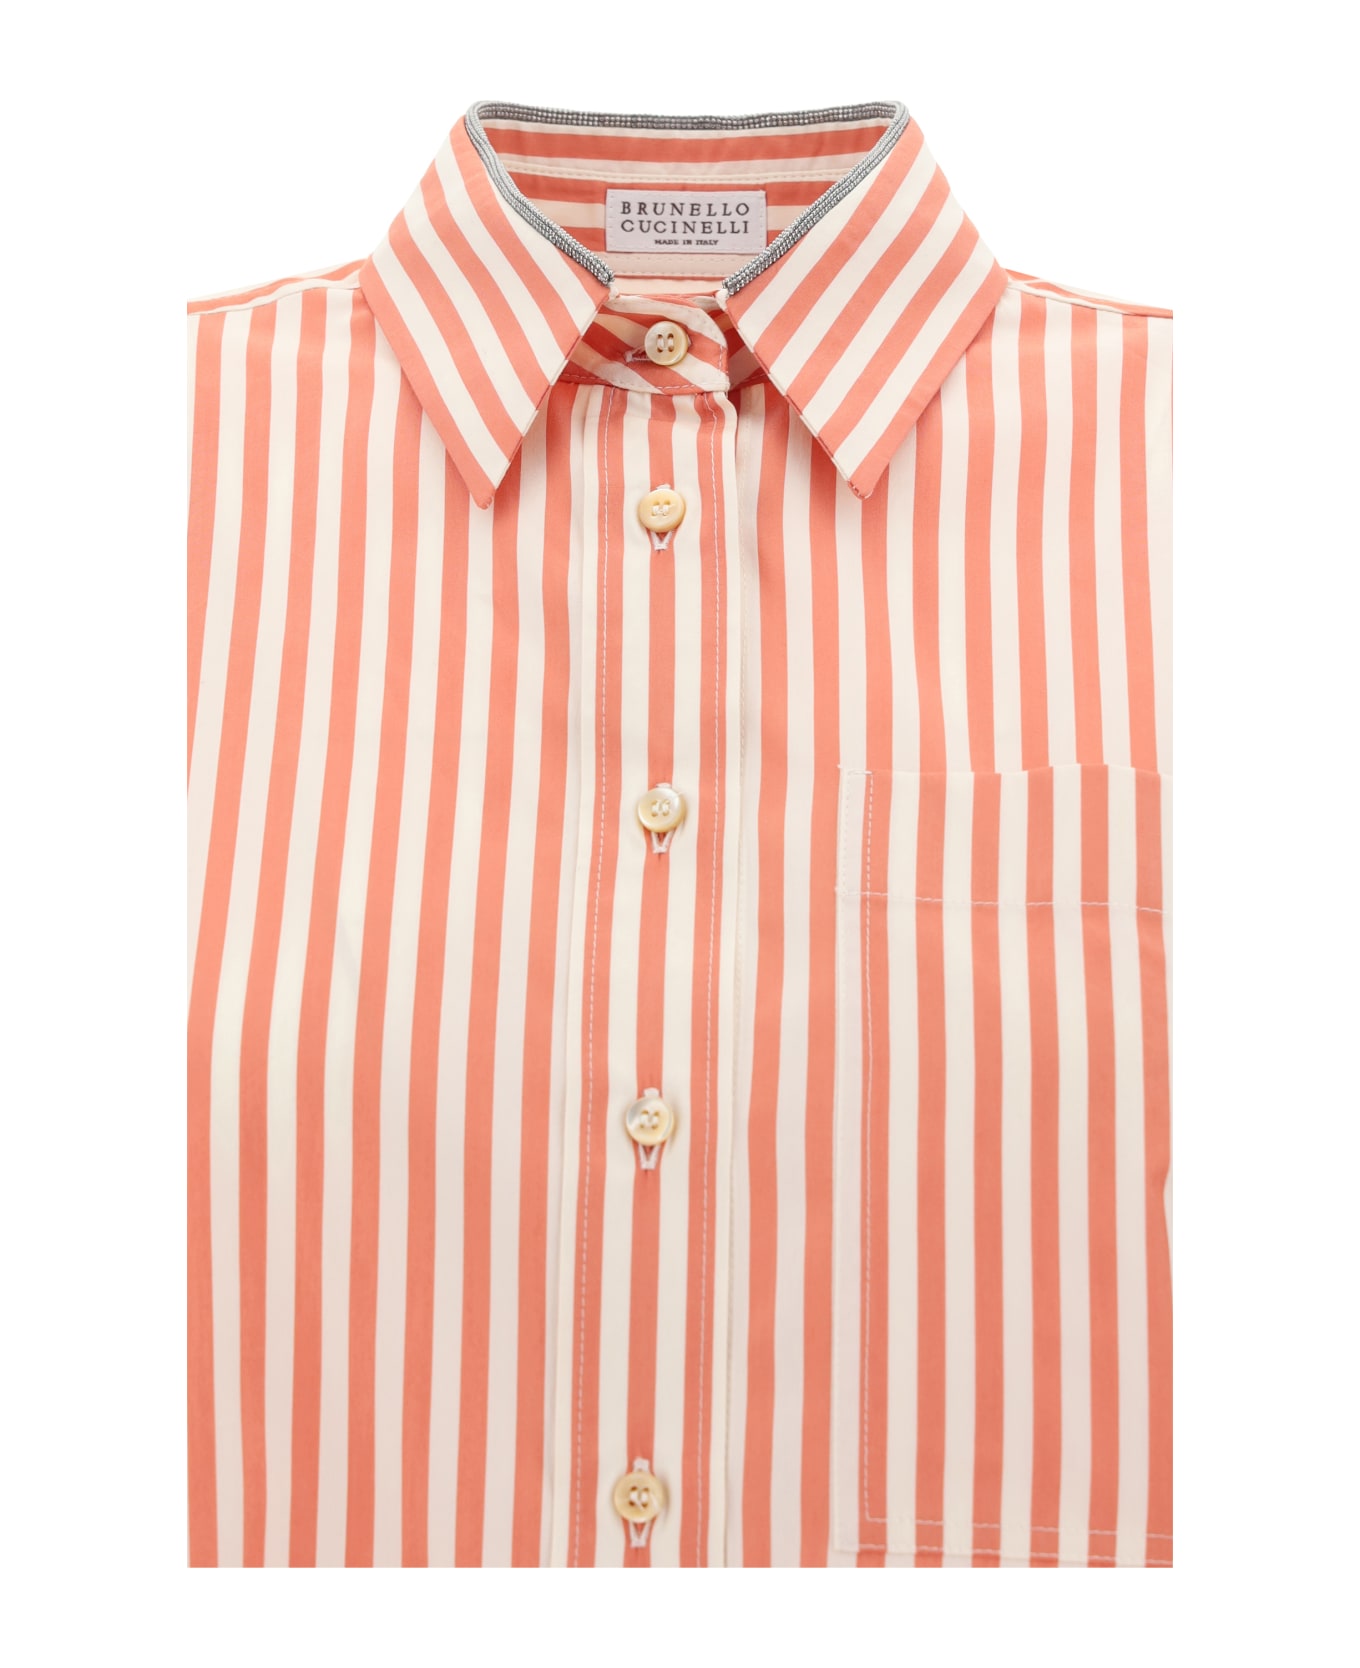 Brunello Cucinelli Shirt - Panama/arancio シャツ